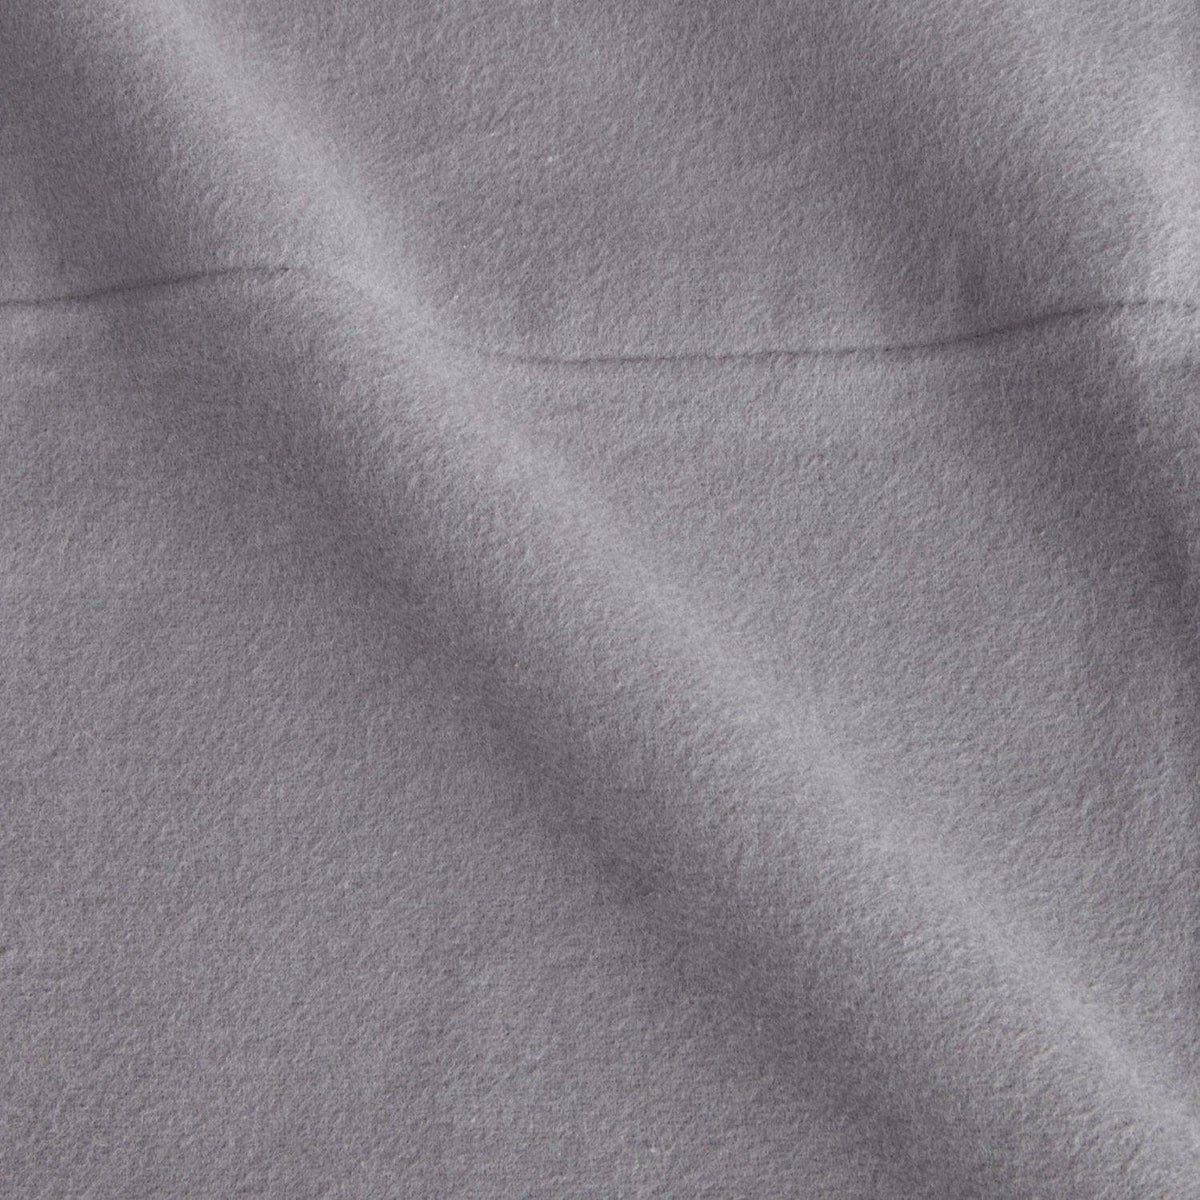 Queen size 100-Percent Cotton Velvet Flannel Sheet Set in Graphite - beddingbag.com